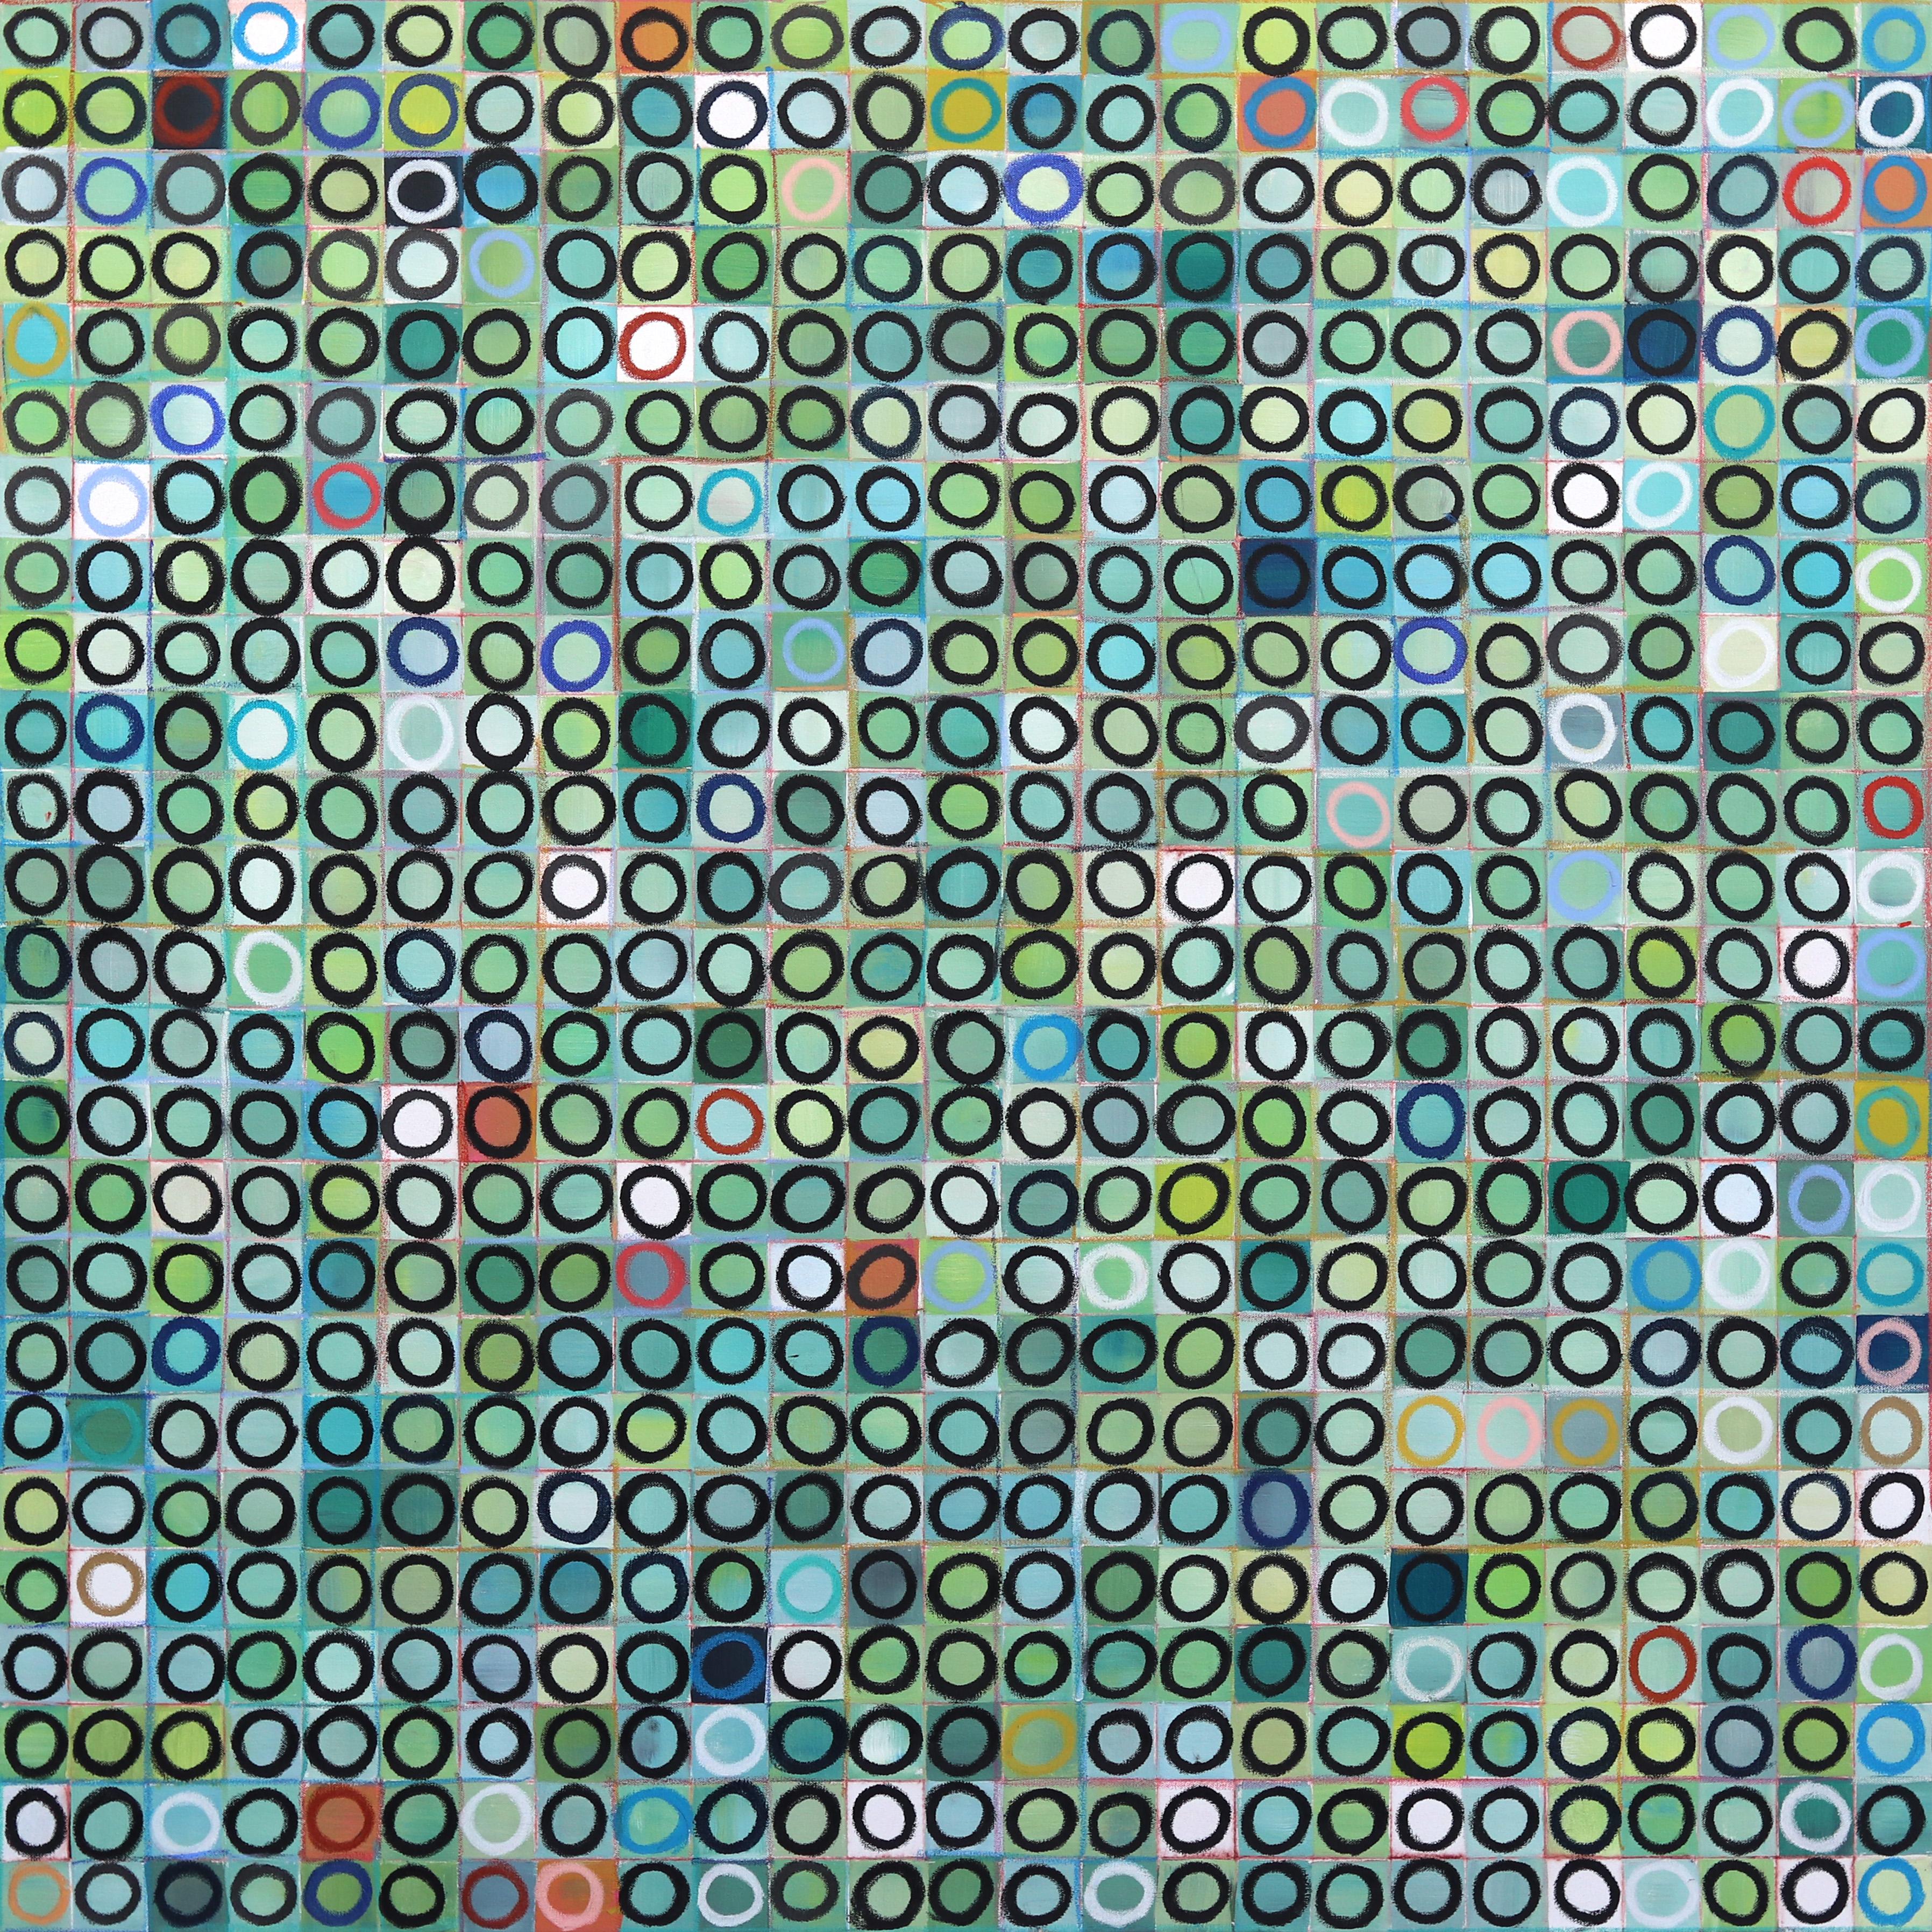 625 Circles - Large Green Abstract Geometric Original Painting